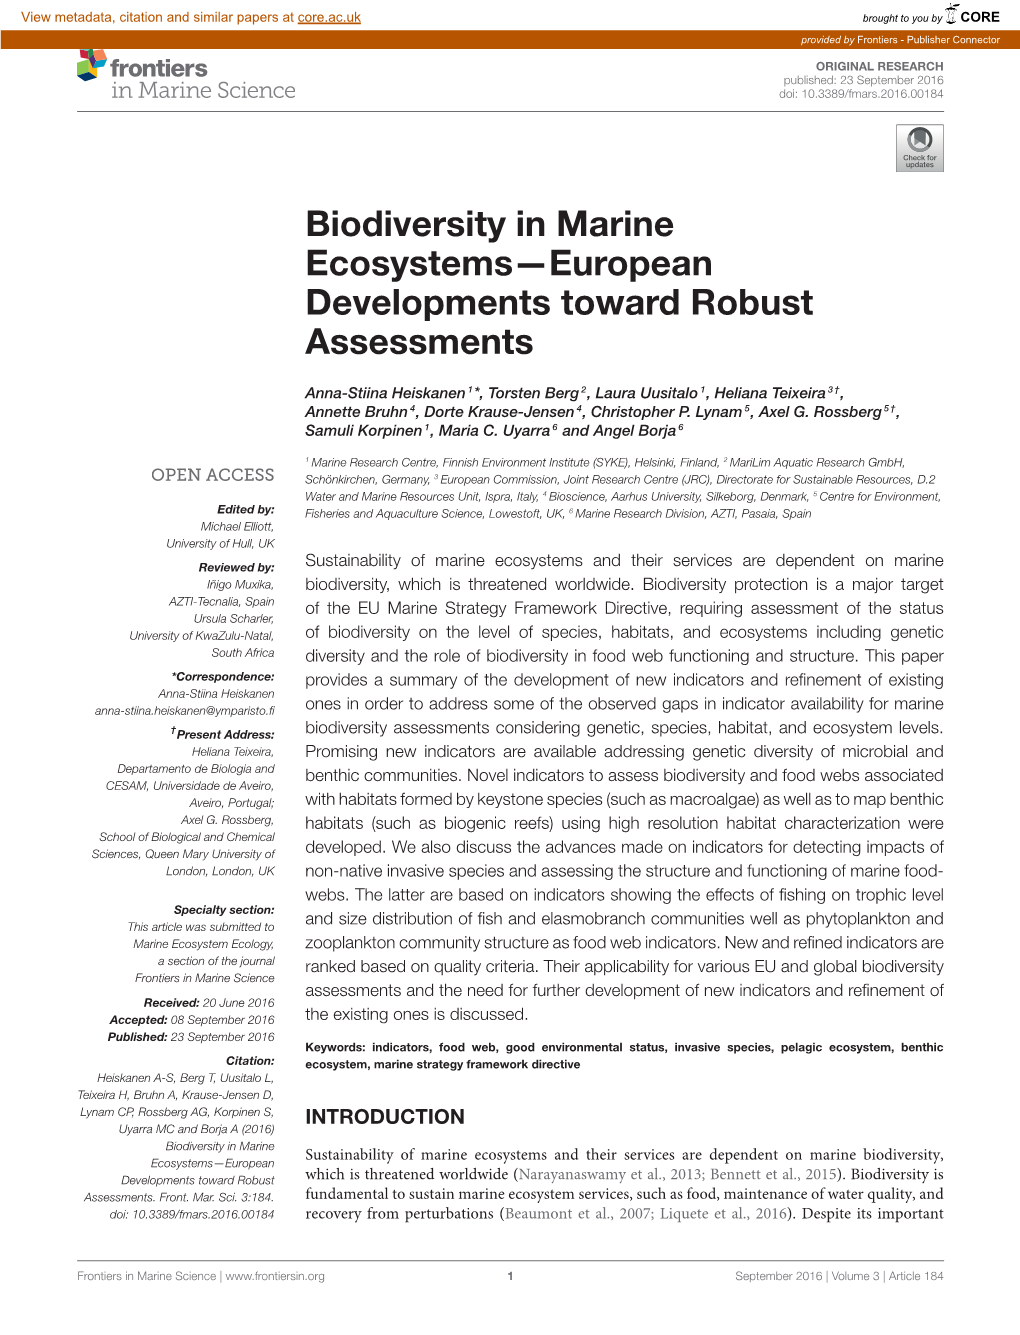 Biodiversity in Marine Ecosystems—European Developments Toward Robust Assessments